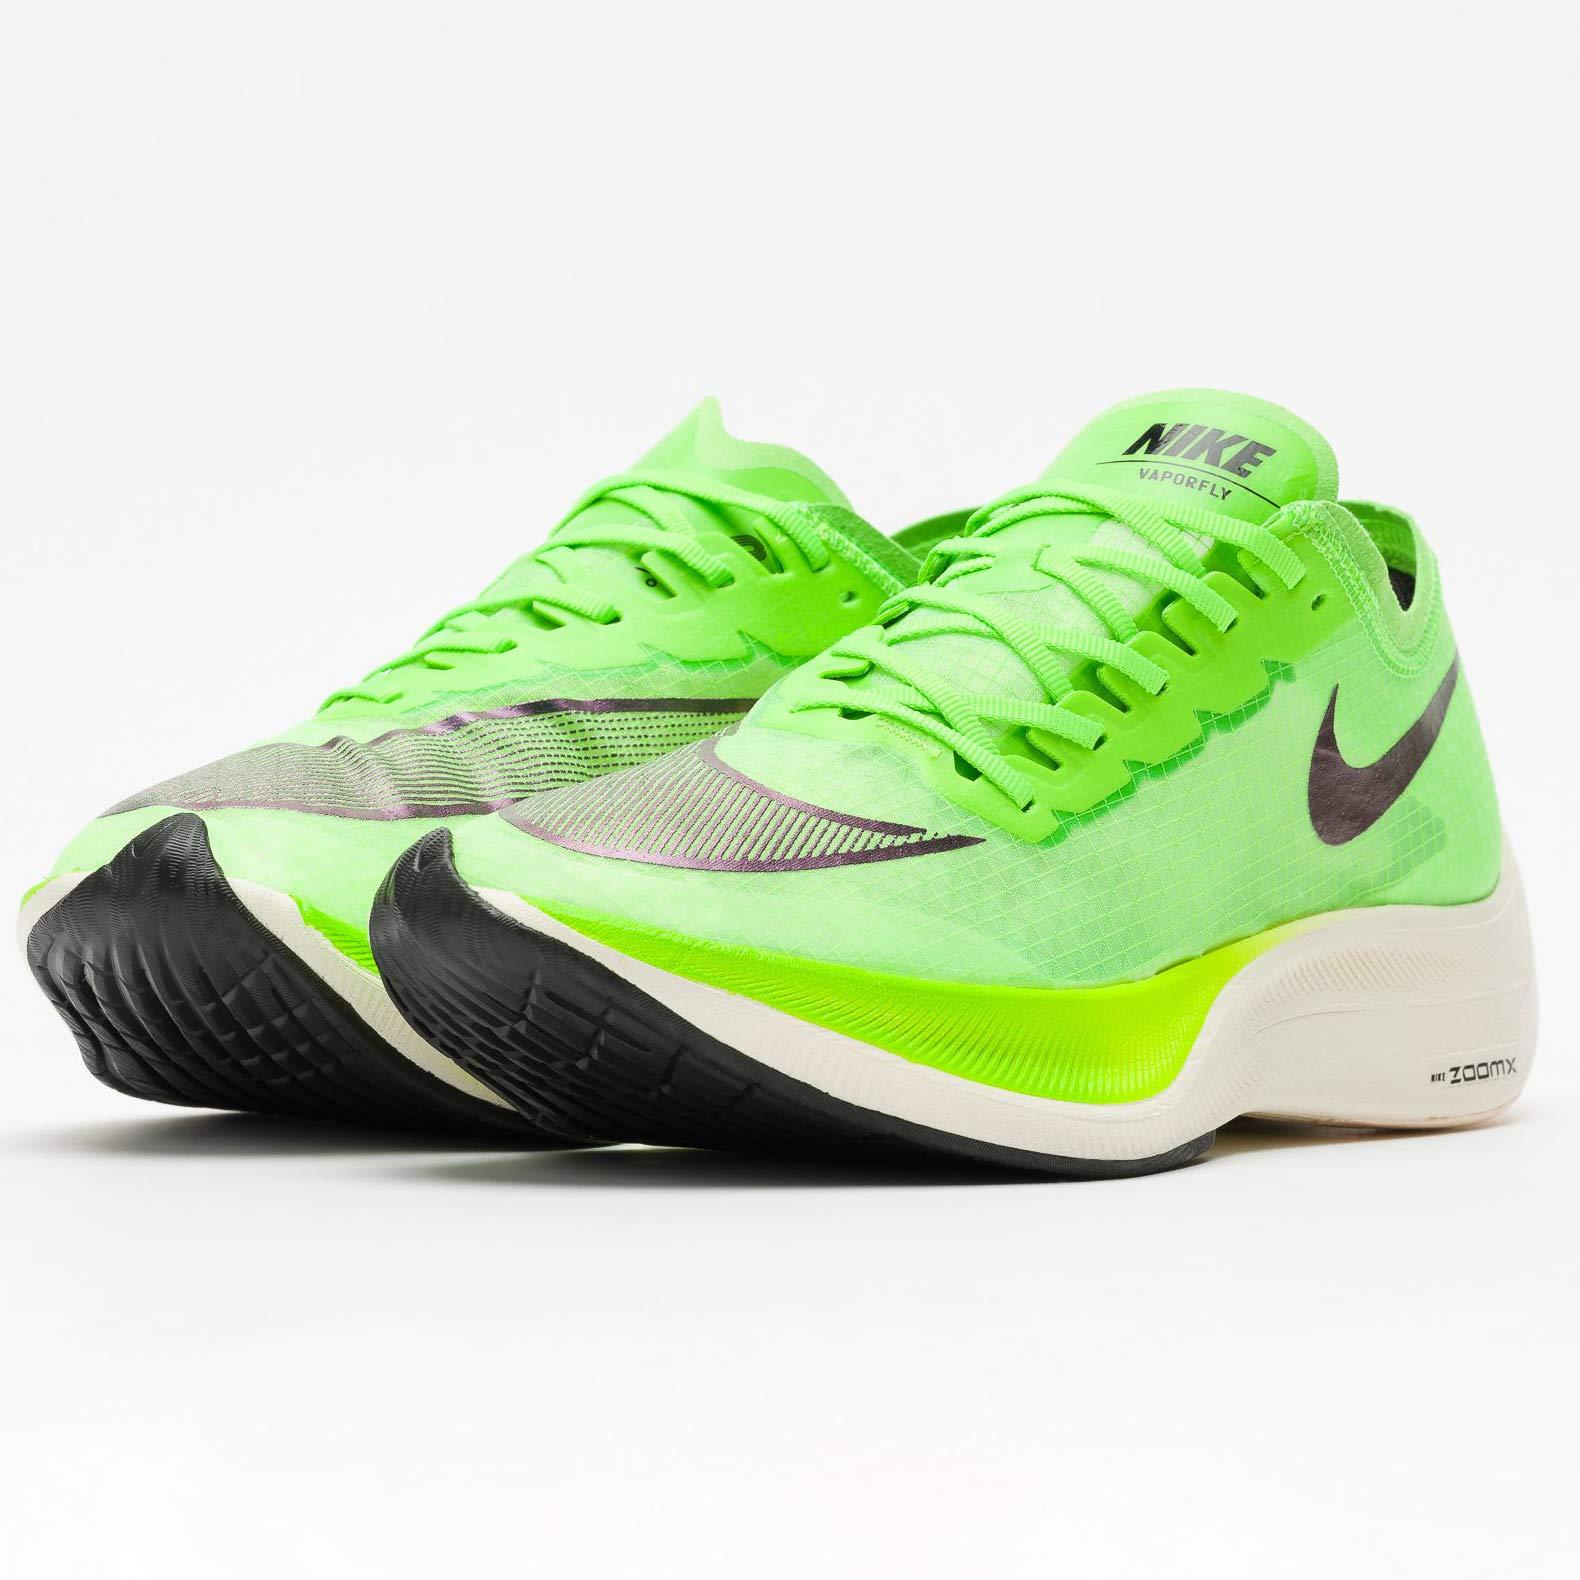 Nike ZoomX Vaporfly Next% Running Shoes (M4.0/W5.5, Green/Black) - Fun Run Box